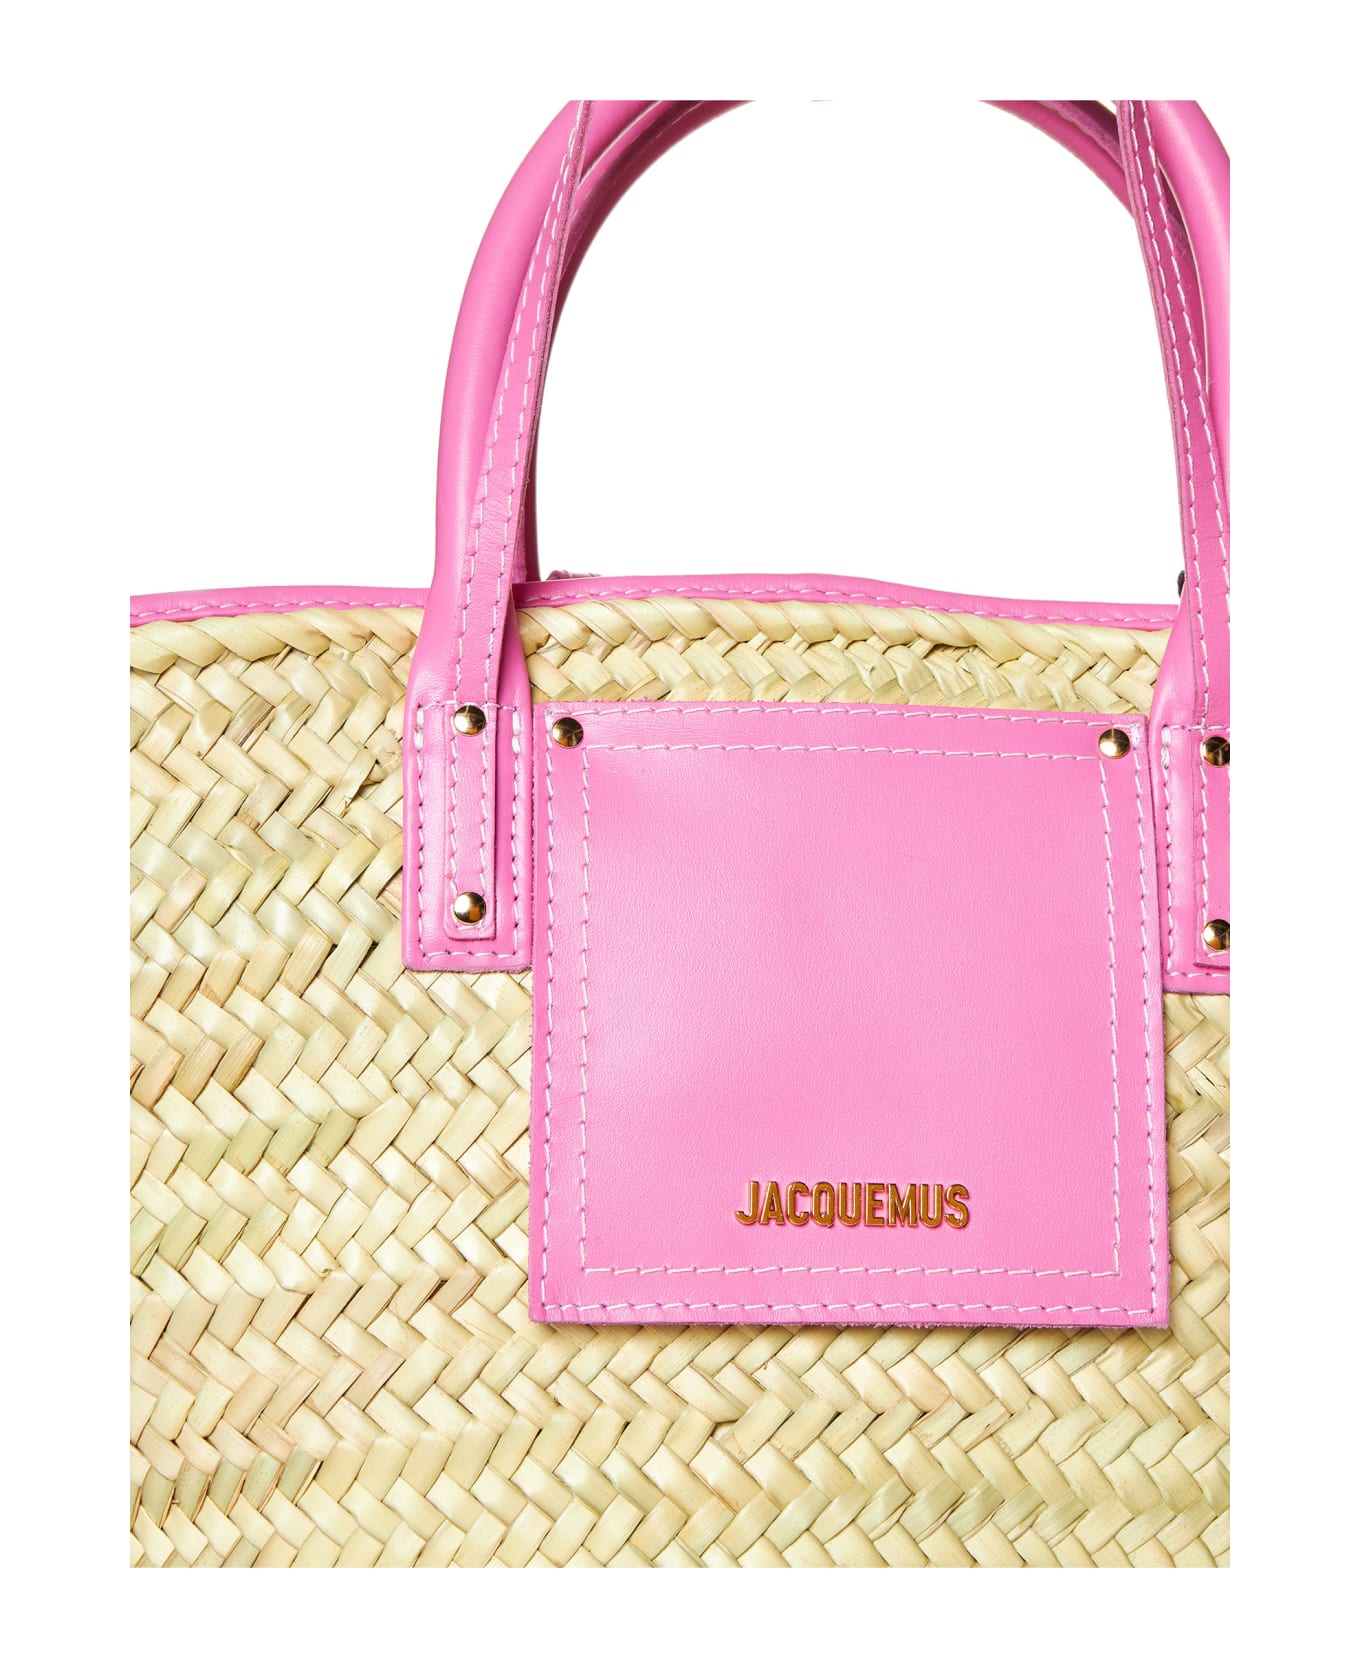 Jacquemus Tote - Neon pink